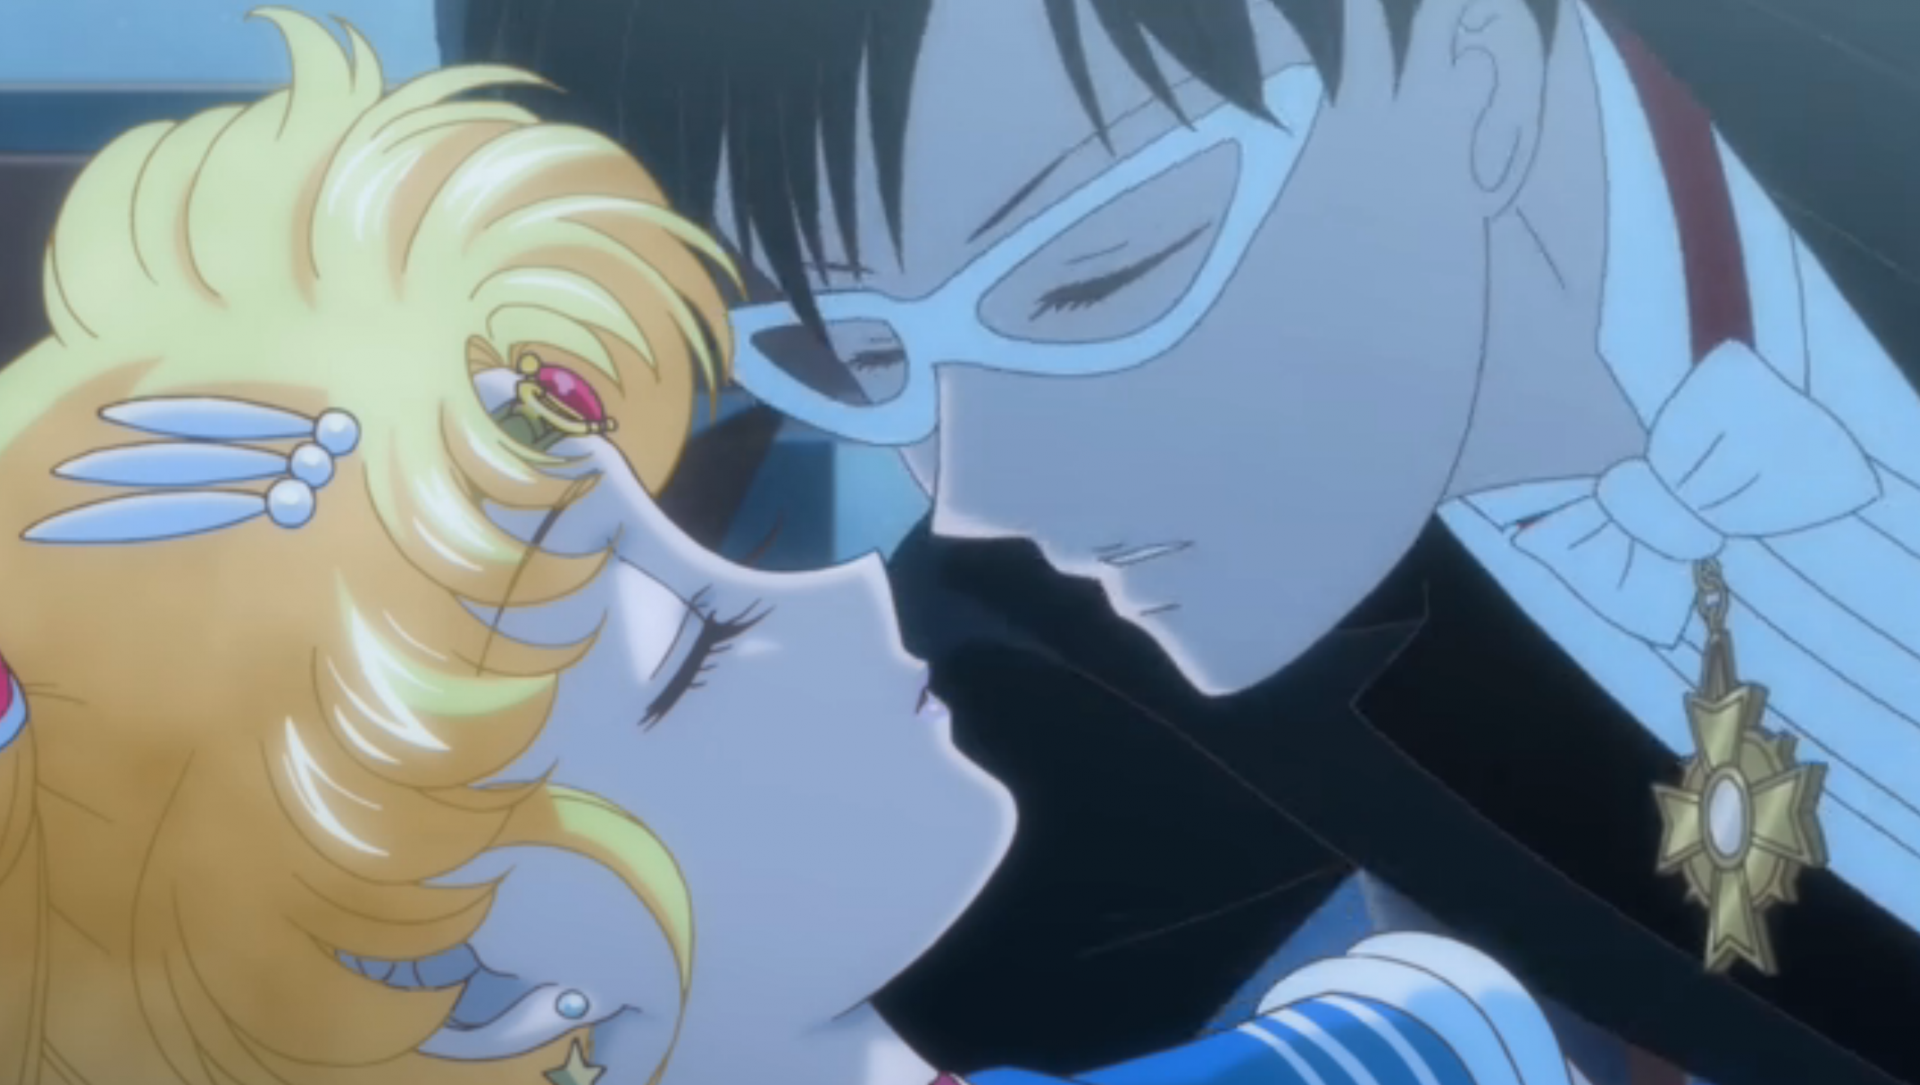 Tuxedo Mask leans over to kiss a sleeping Sailor Moon